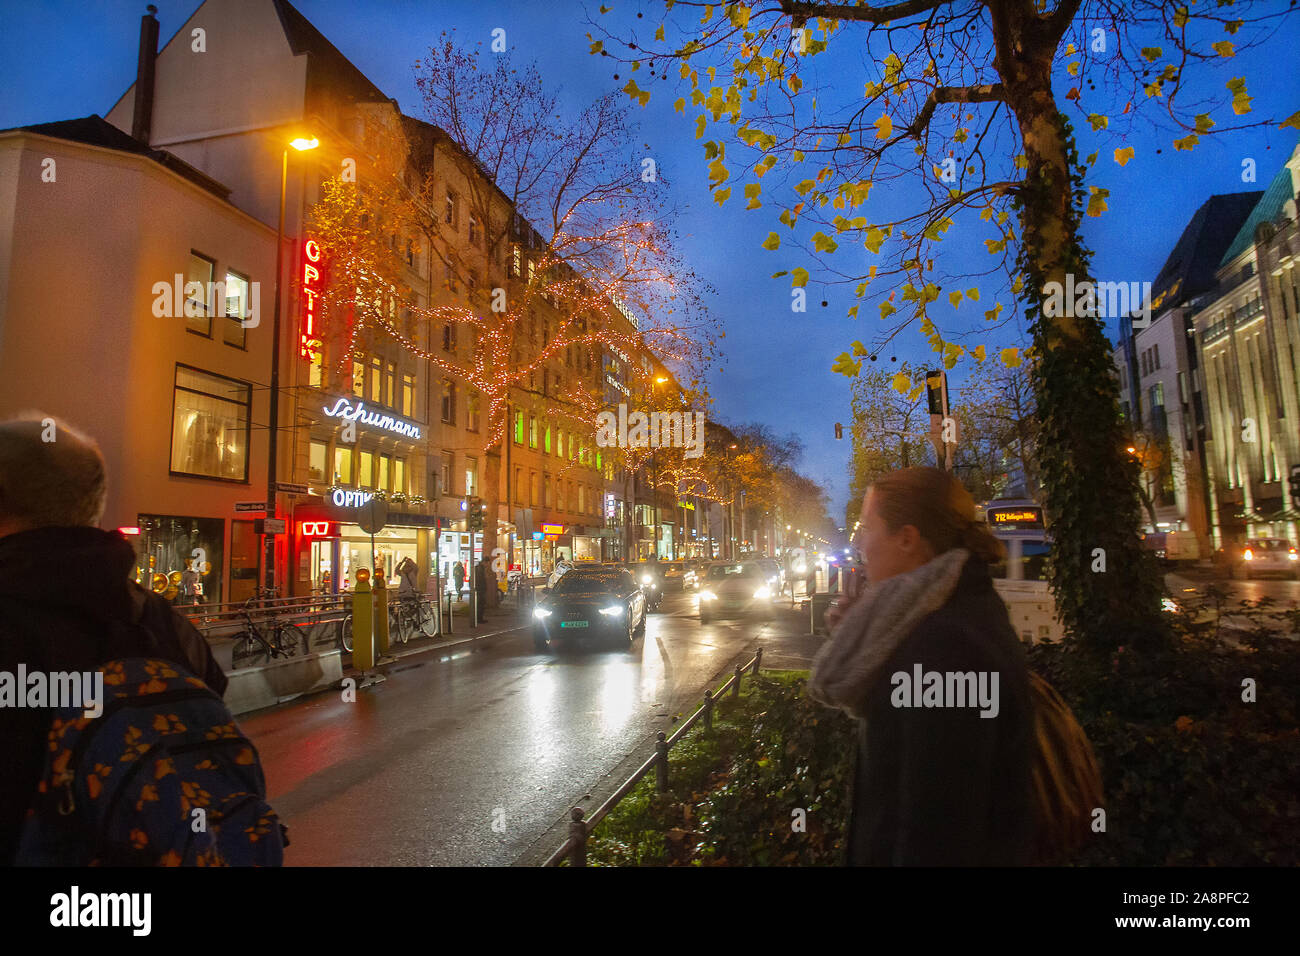 11/25/2015 Dusseldorf Germany  Majestic Dusseldorf -  twilight and  illuminated  city - Dusseldorf  - Wow! Stock Photo